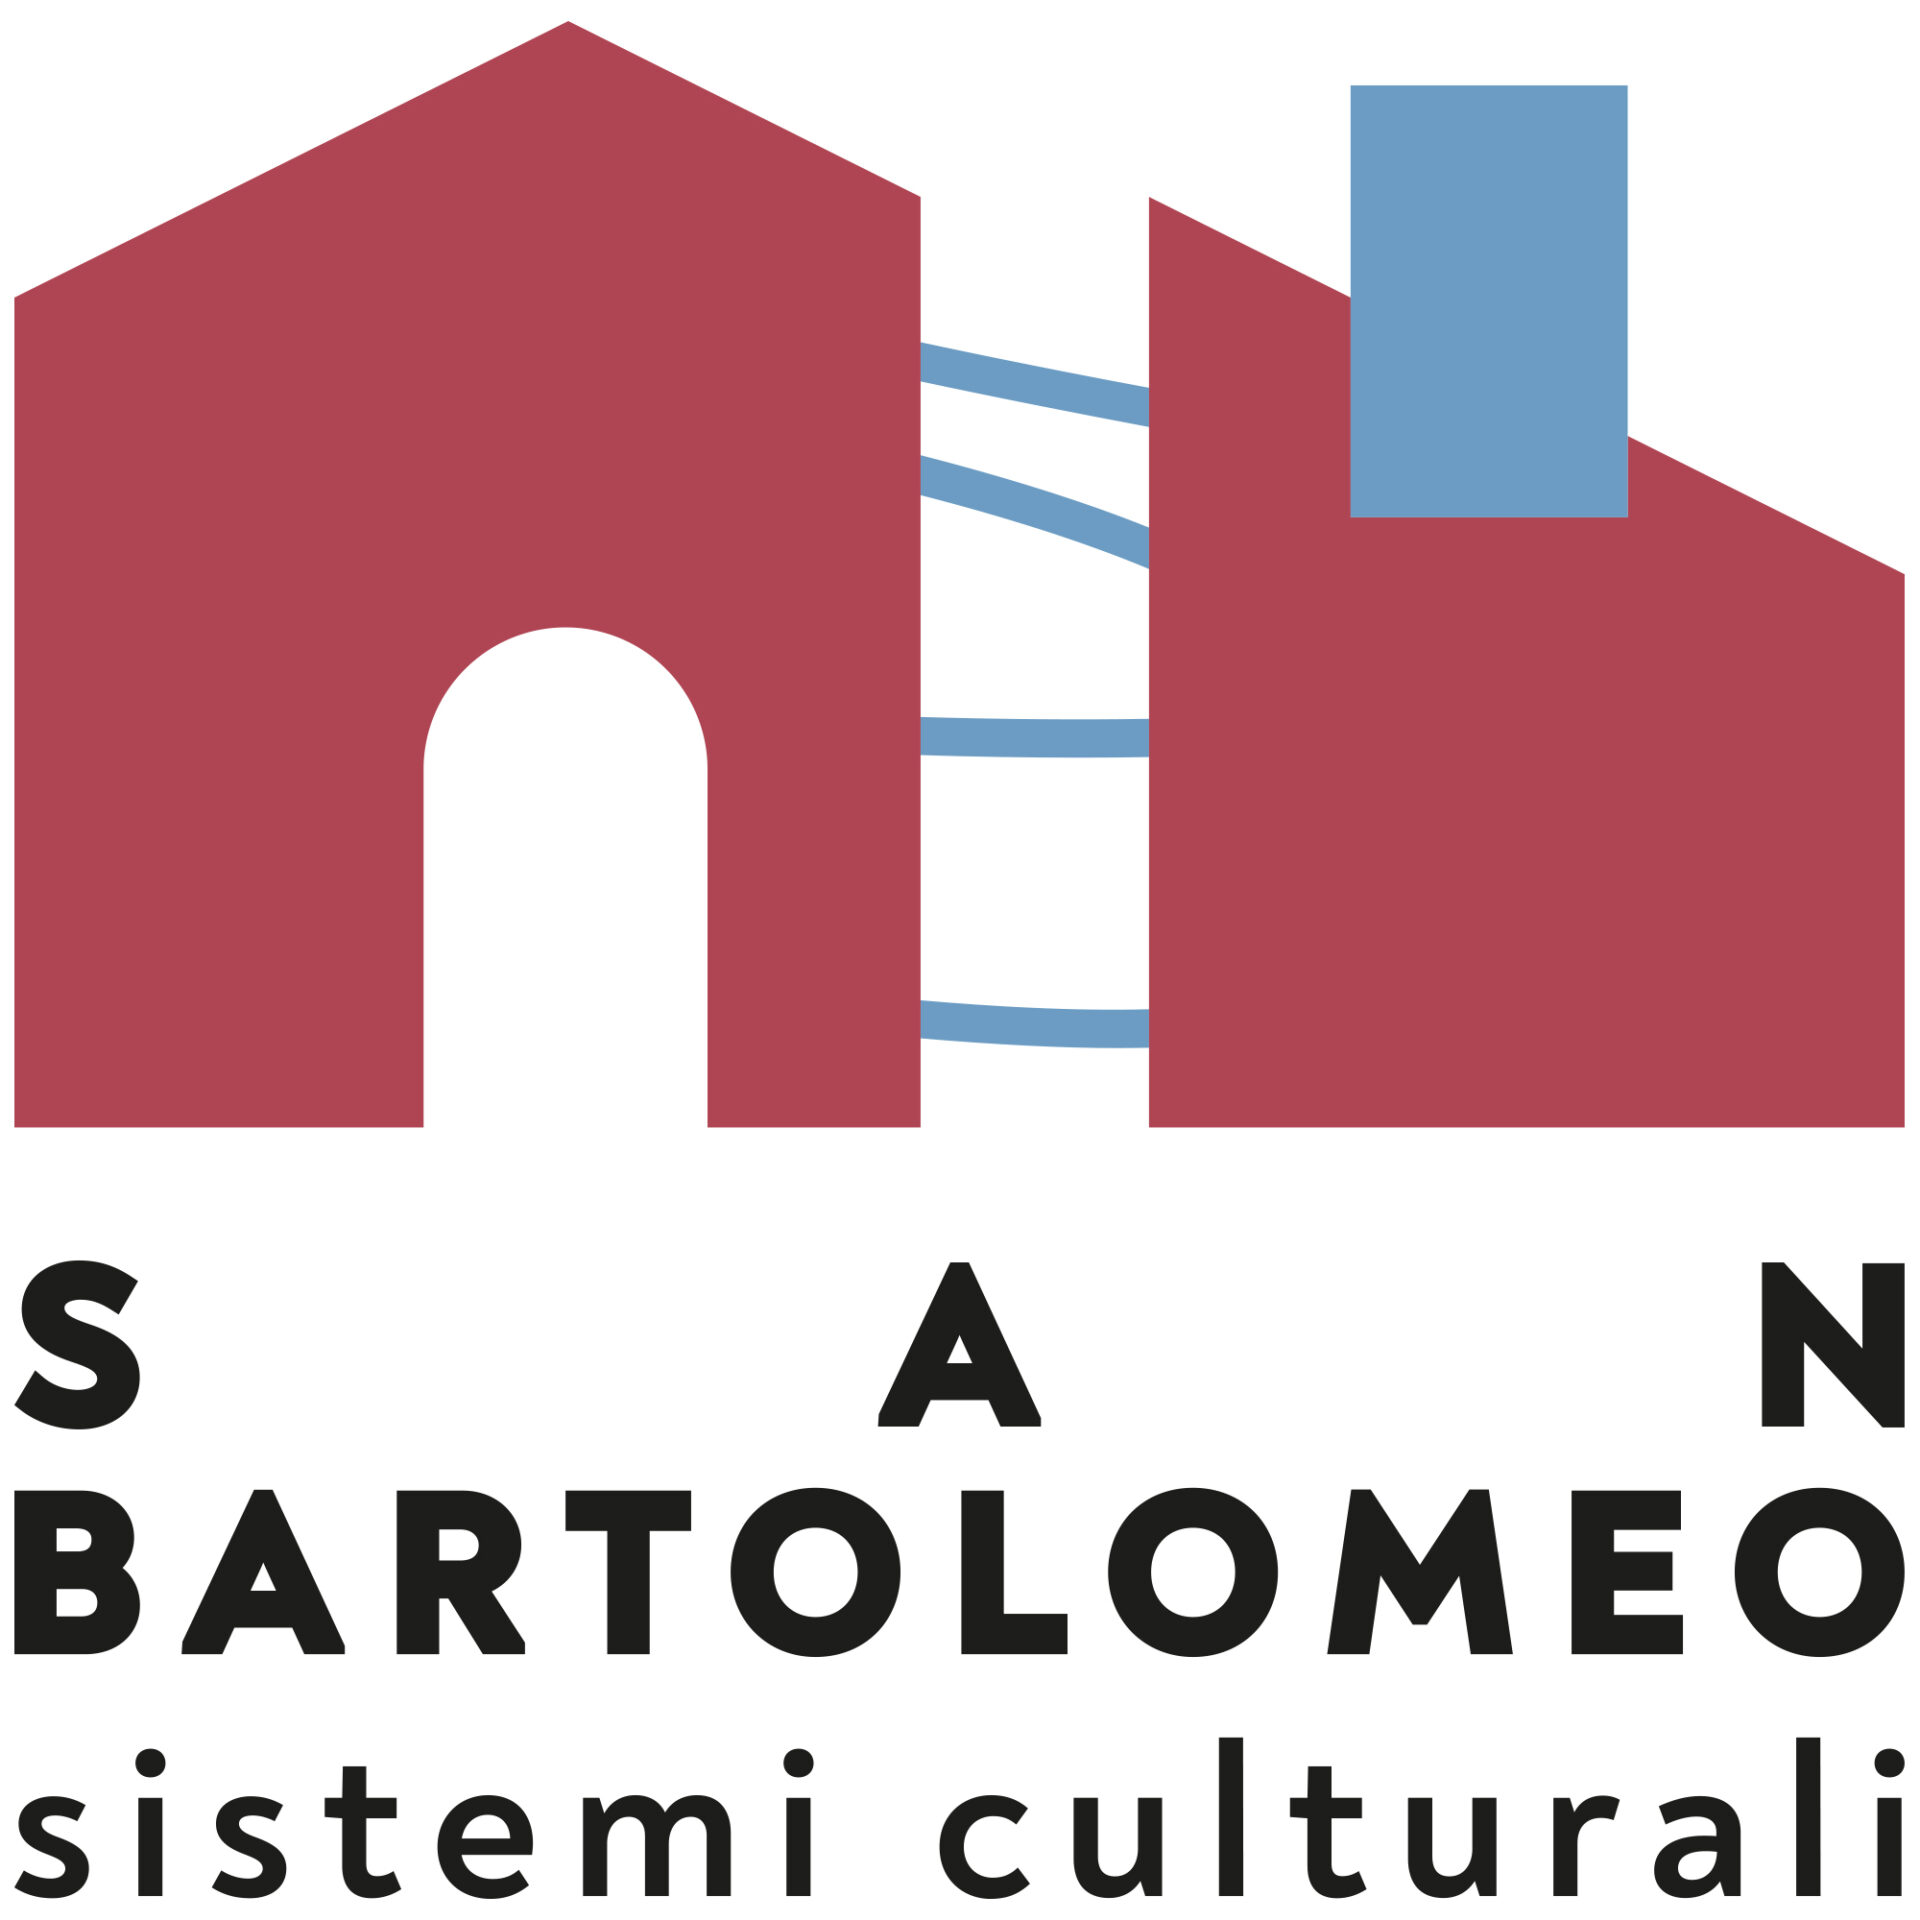 San Bartolomeo - sistemi culturali